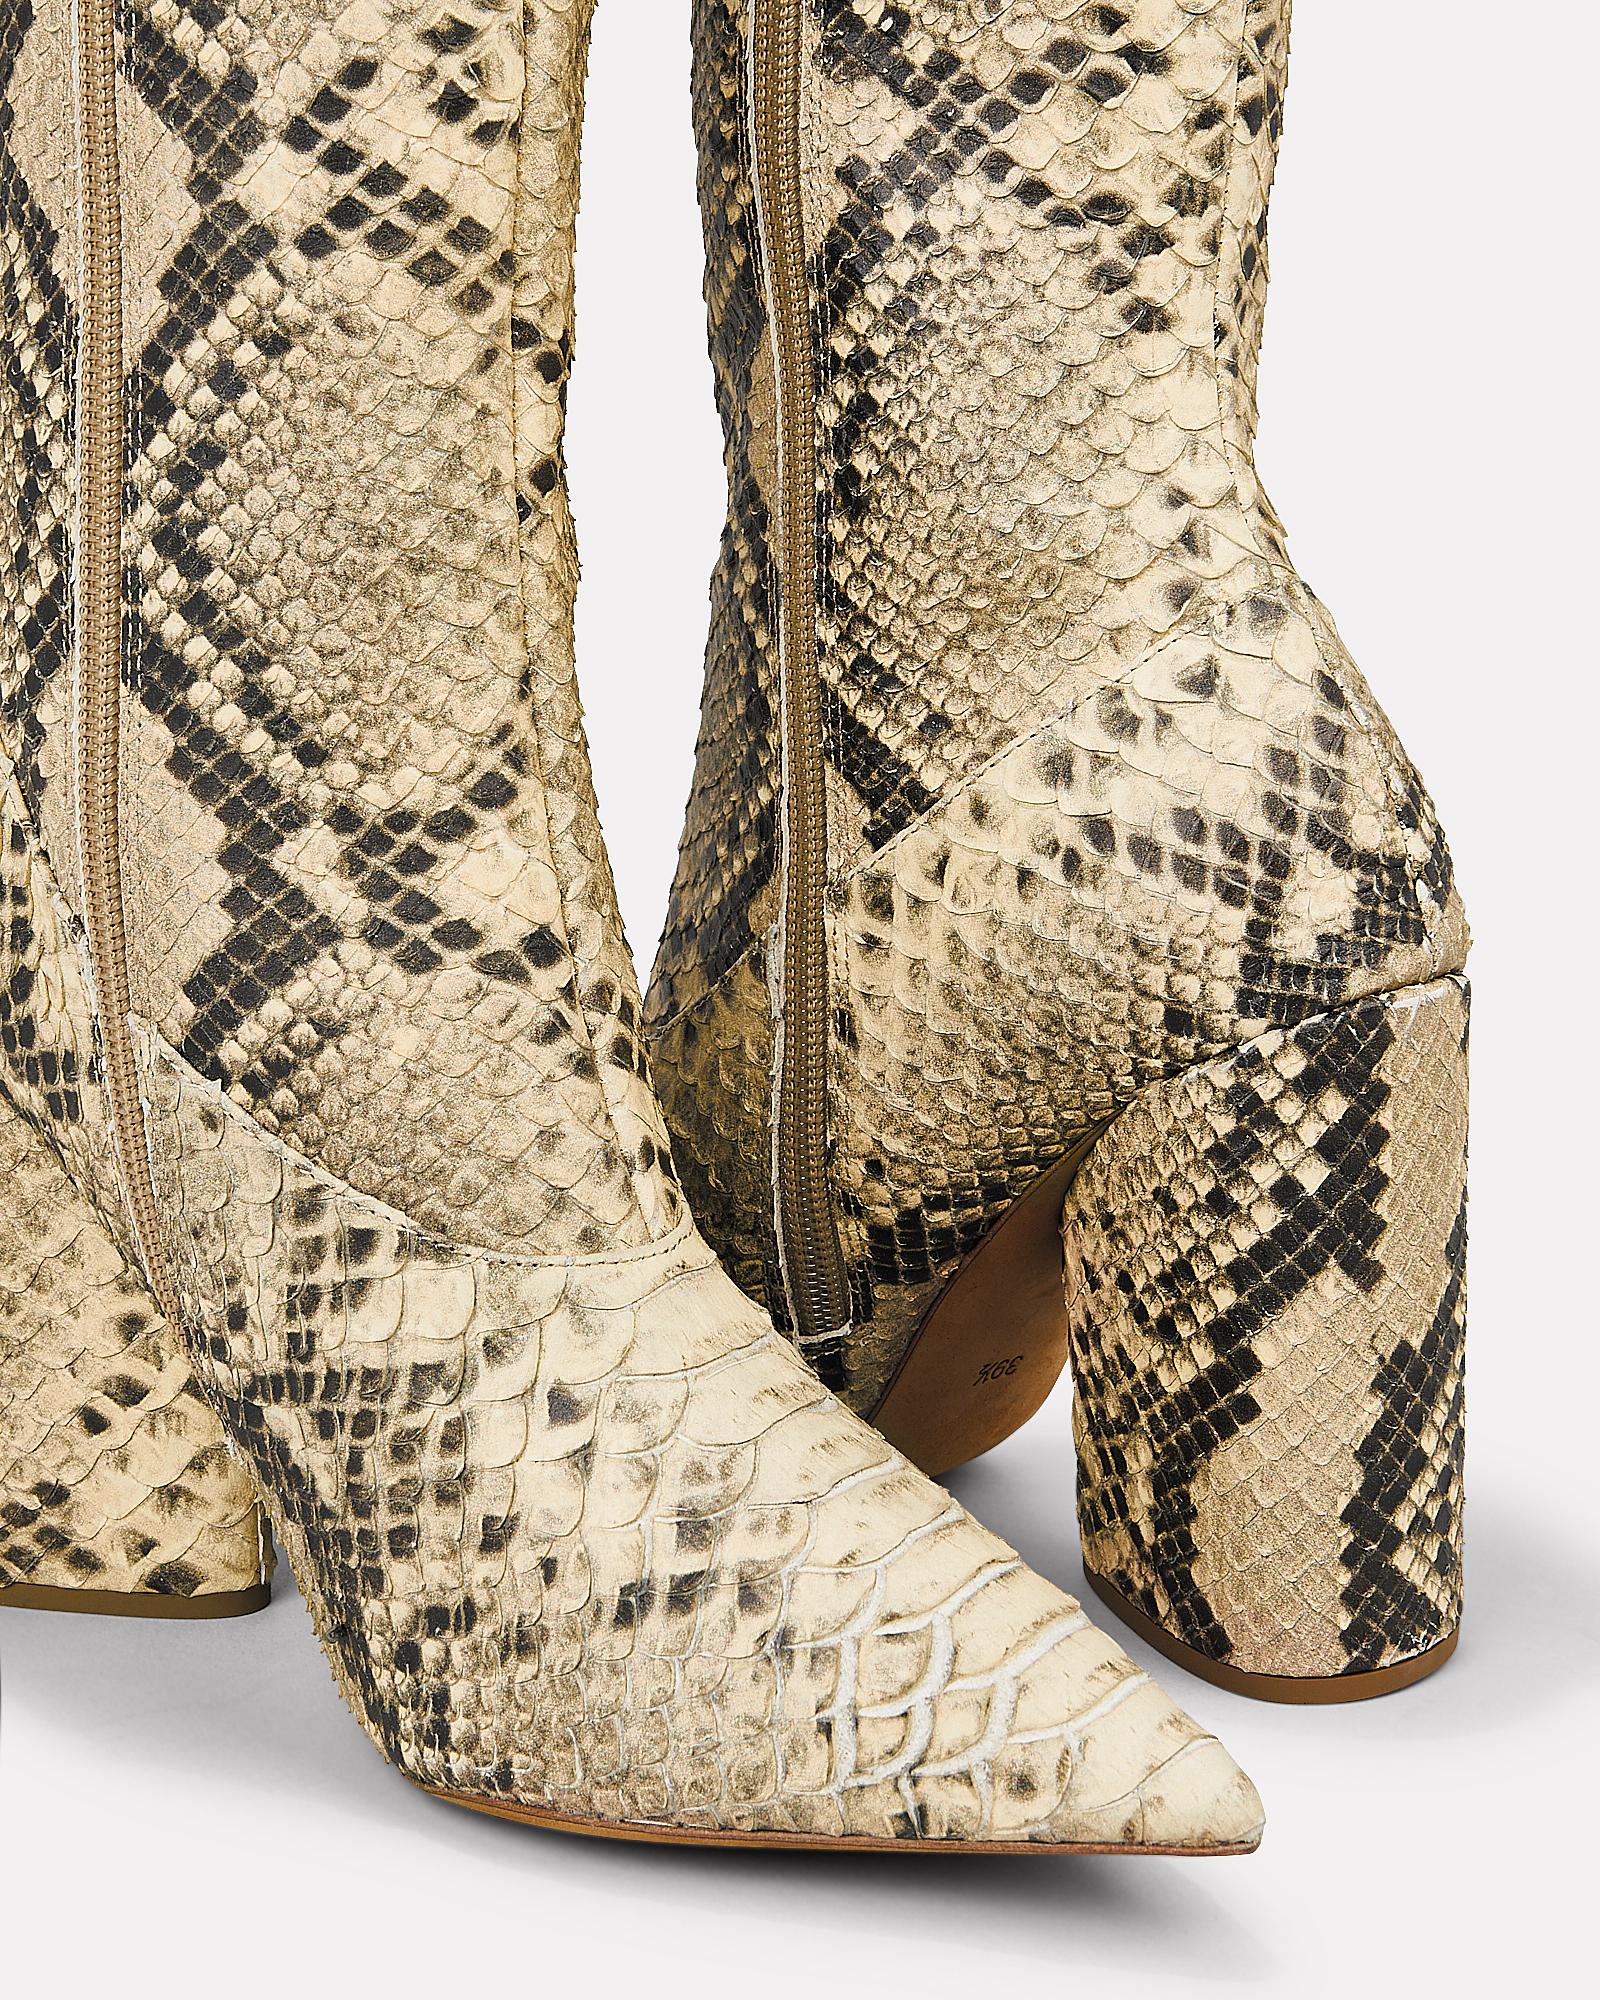 Yeezy Snake Print Boots on Sale, 54% OFF | www.ingeniovirtual.com